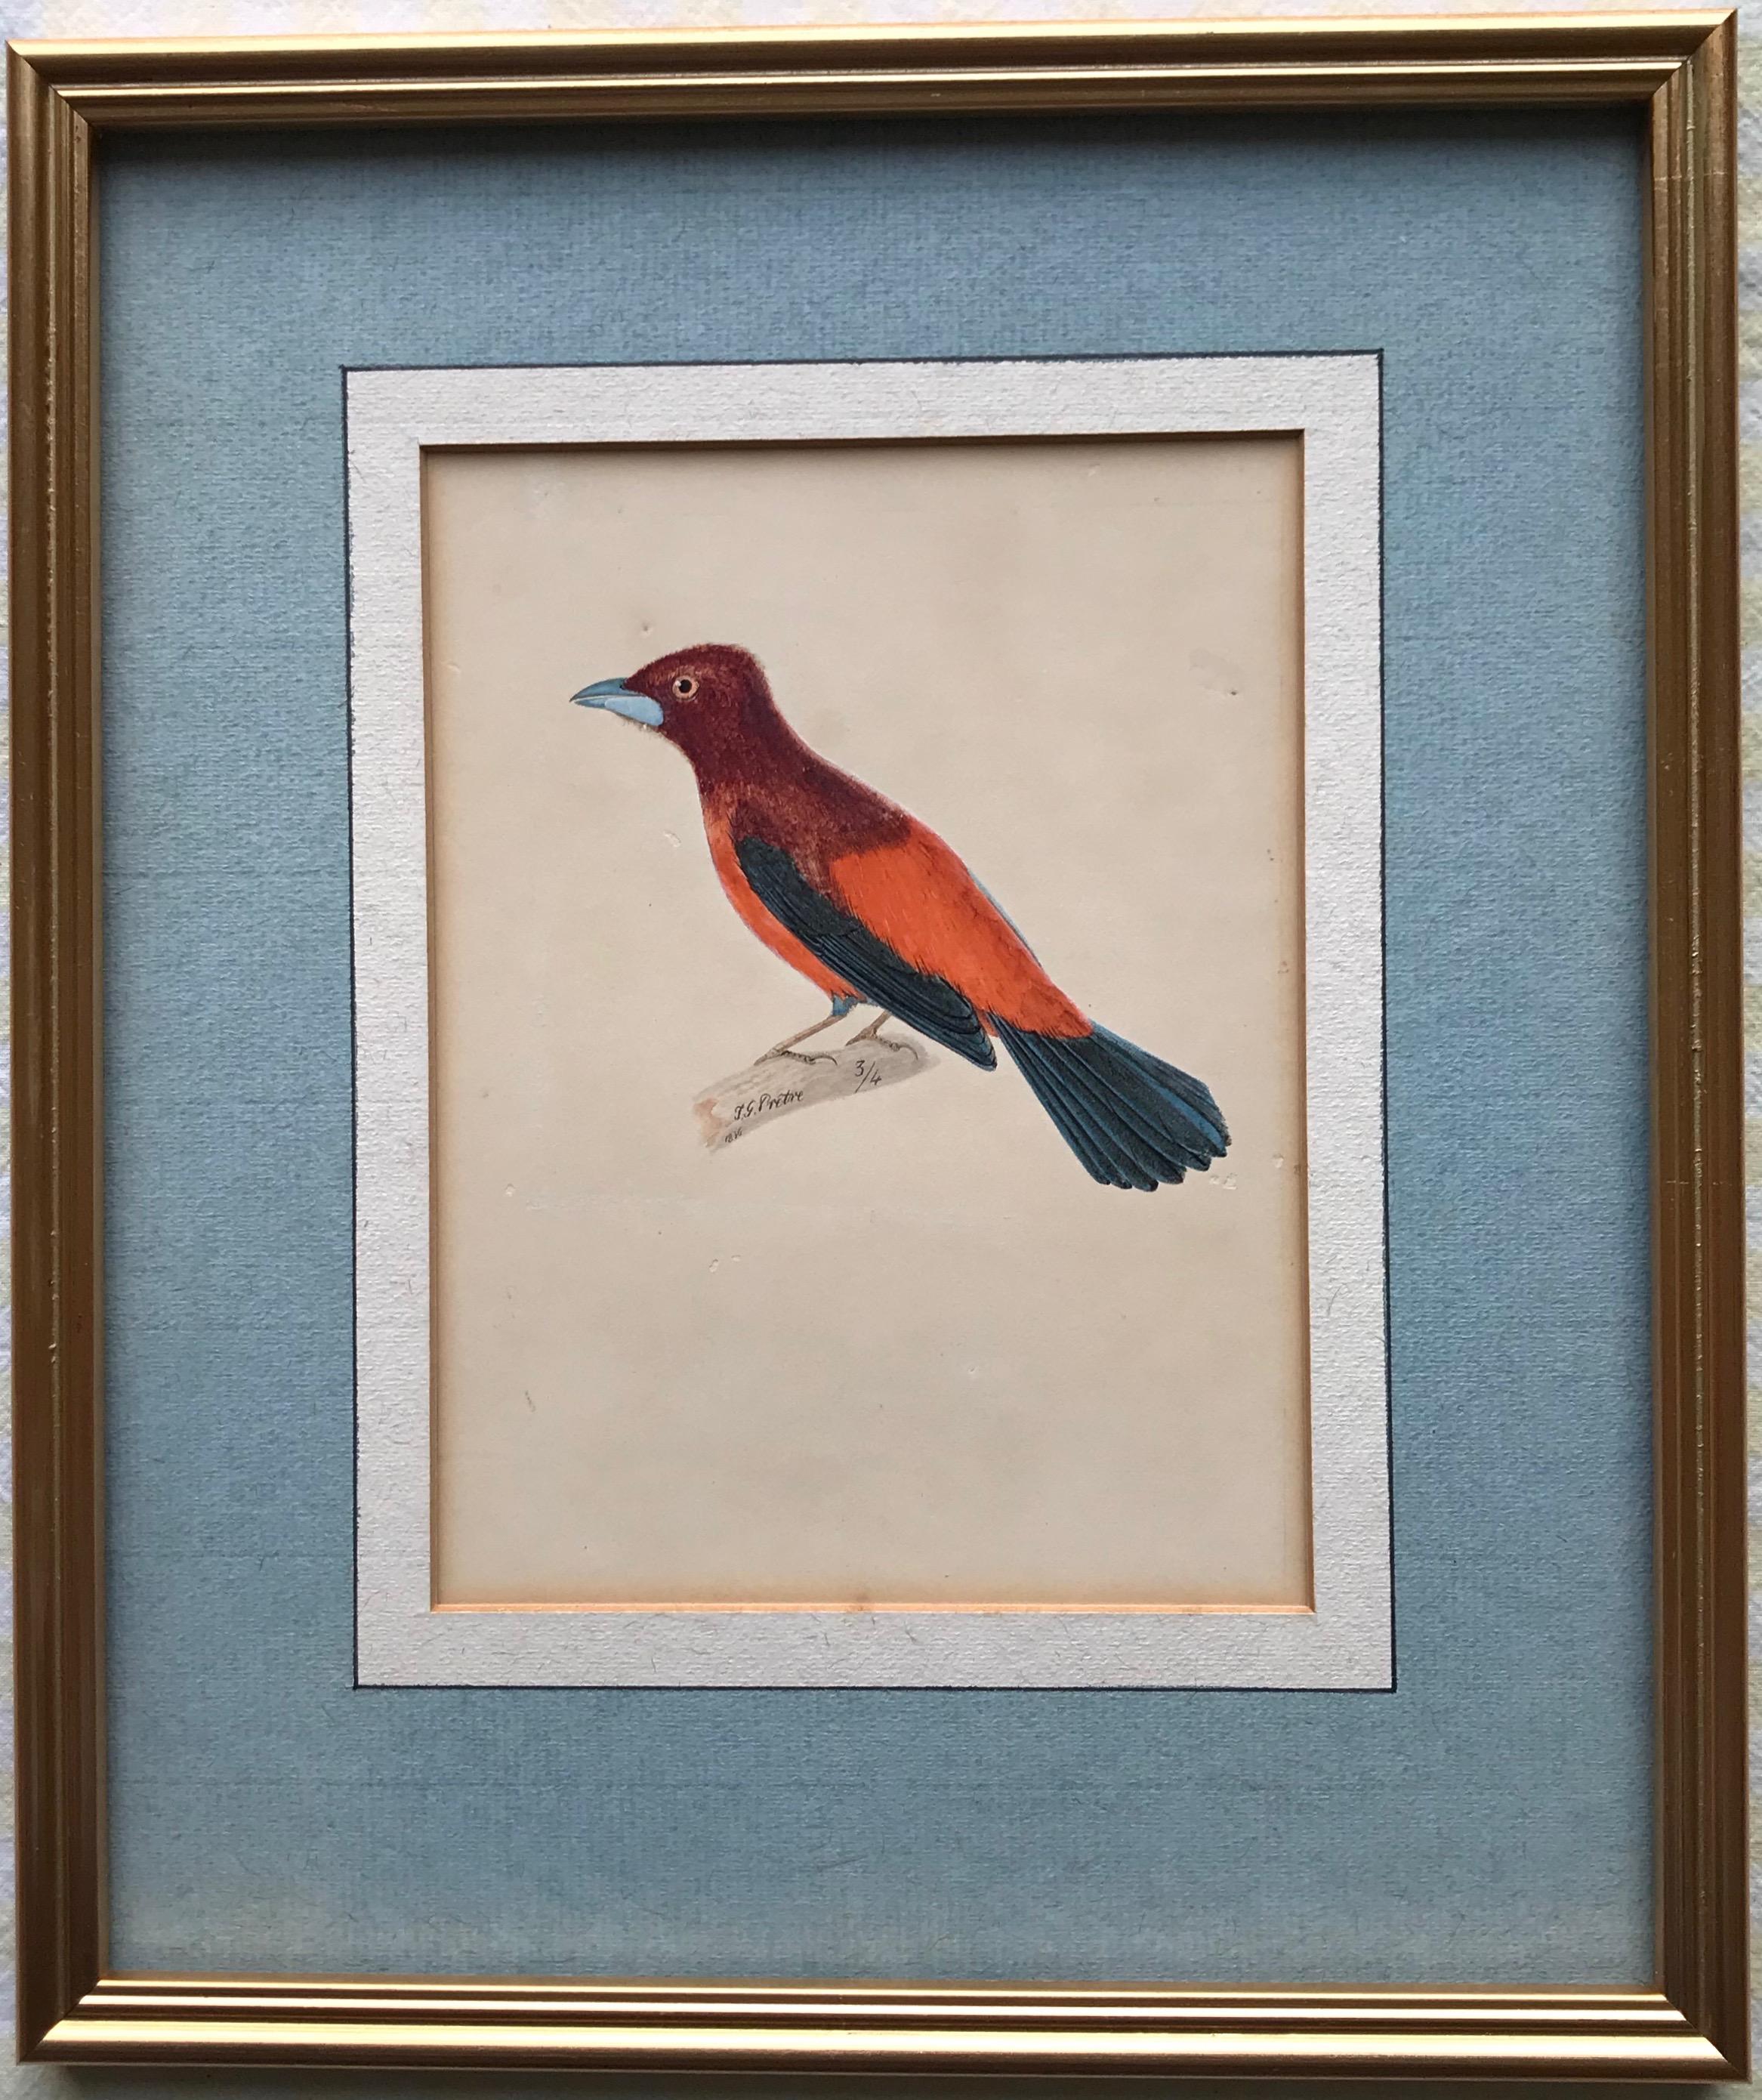 swiss artists painting of a bird